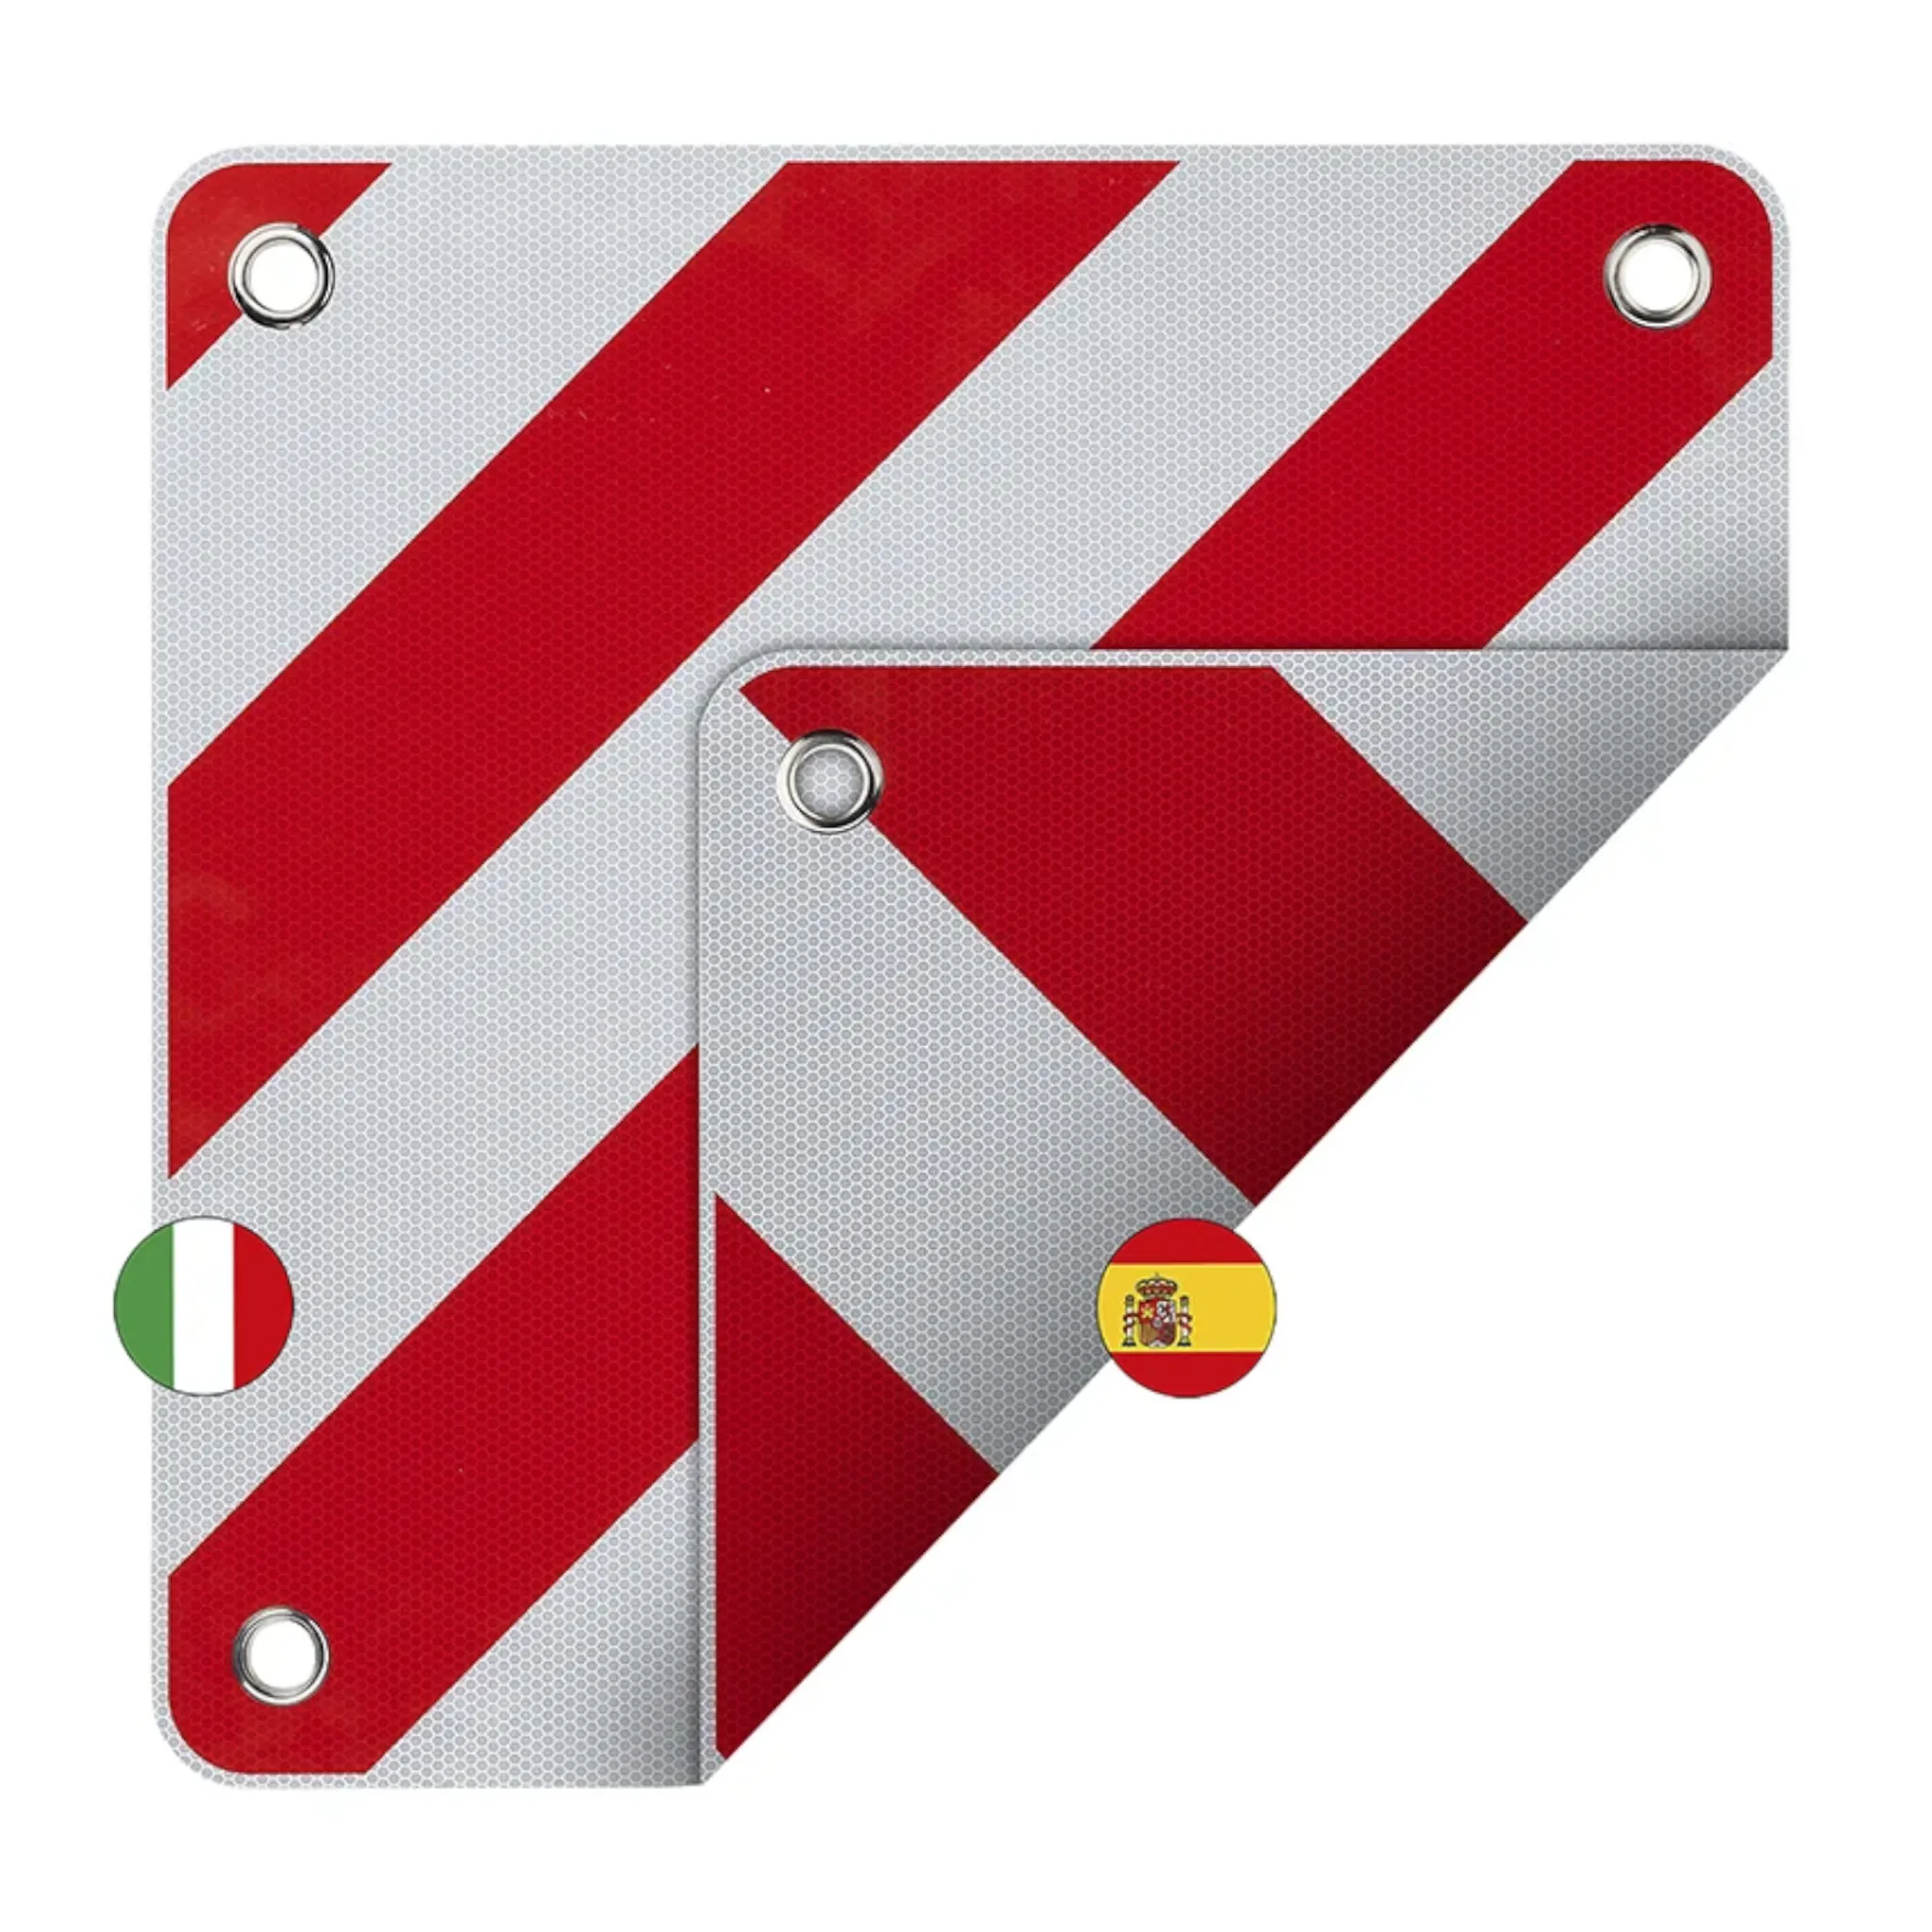 Alu-Warntafel 50x50cm für Italien/Spanien 2 in 1 